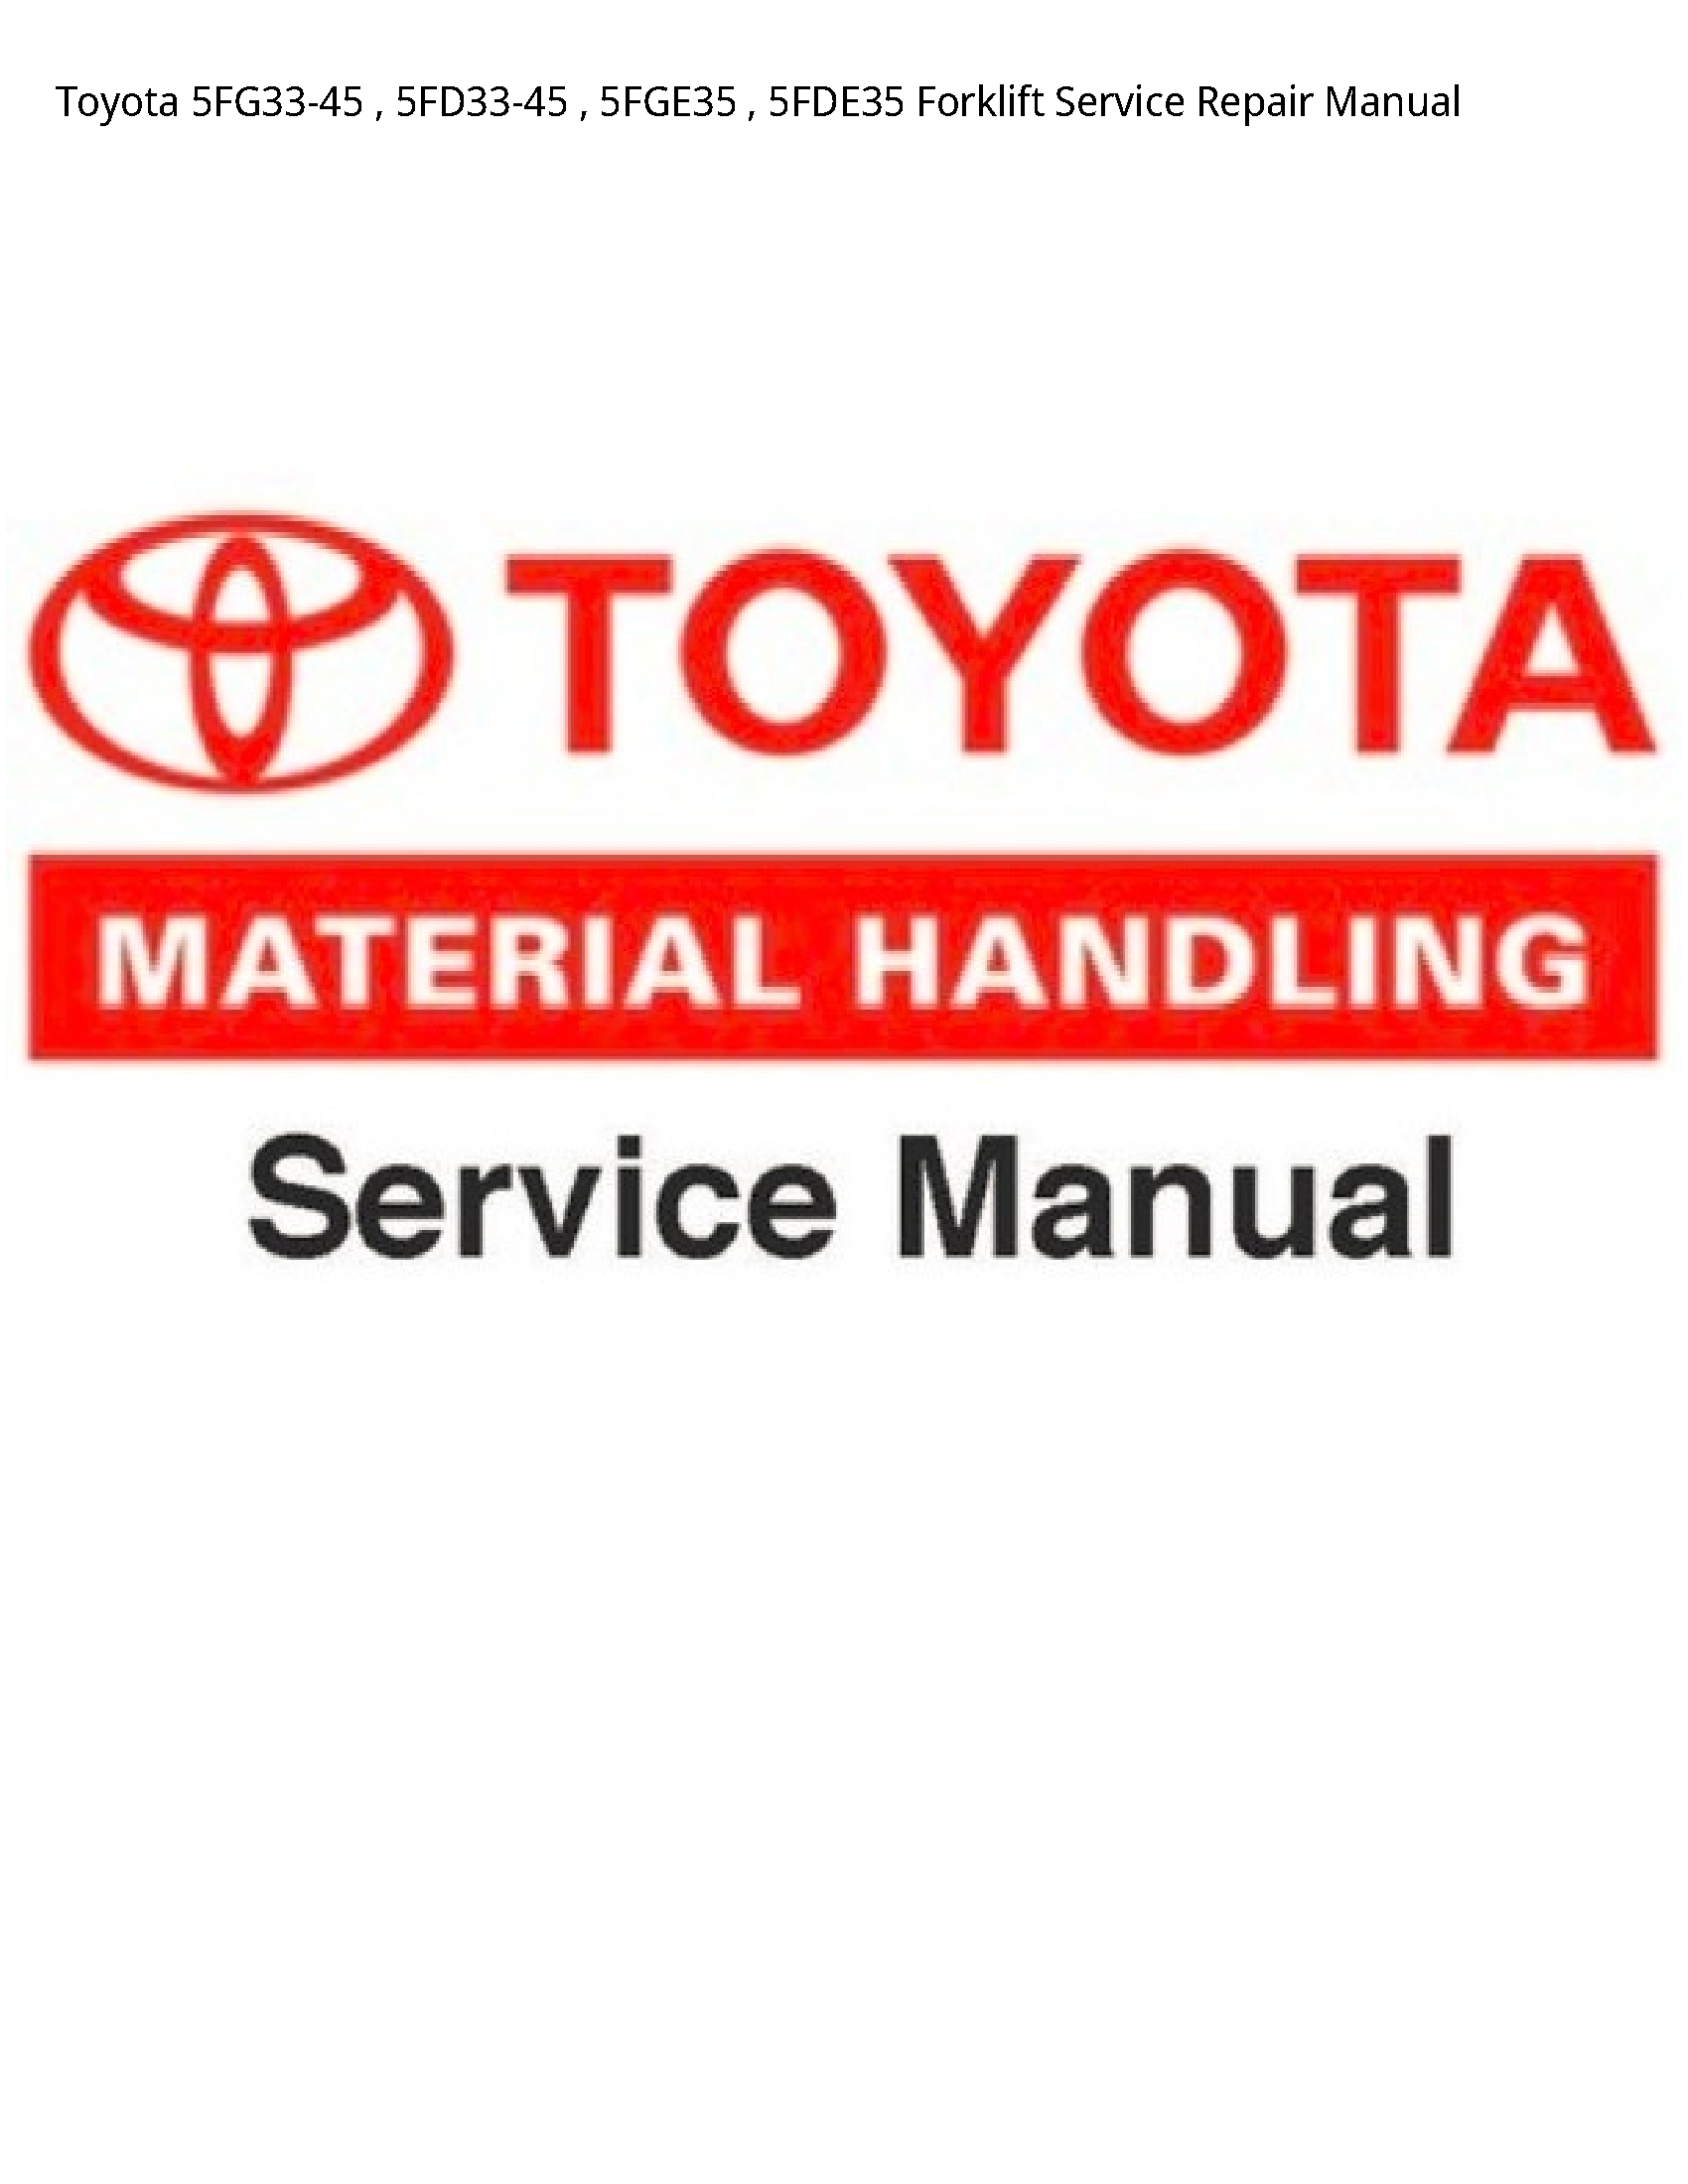 Toyota 5FG33-45 Forklift manual